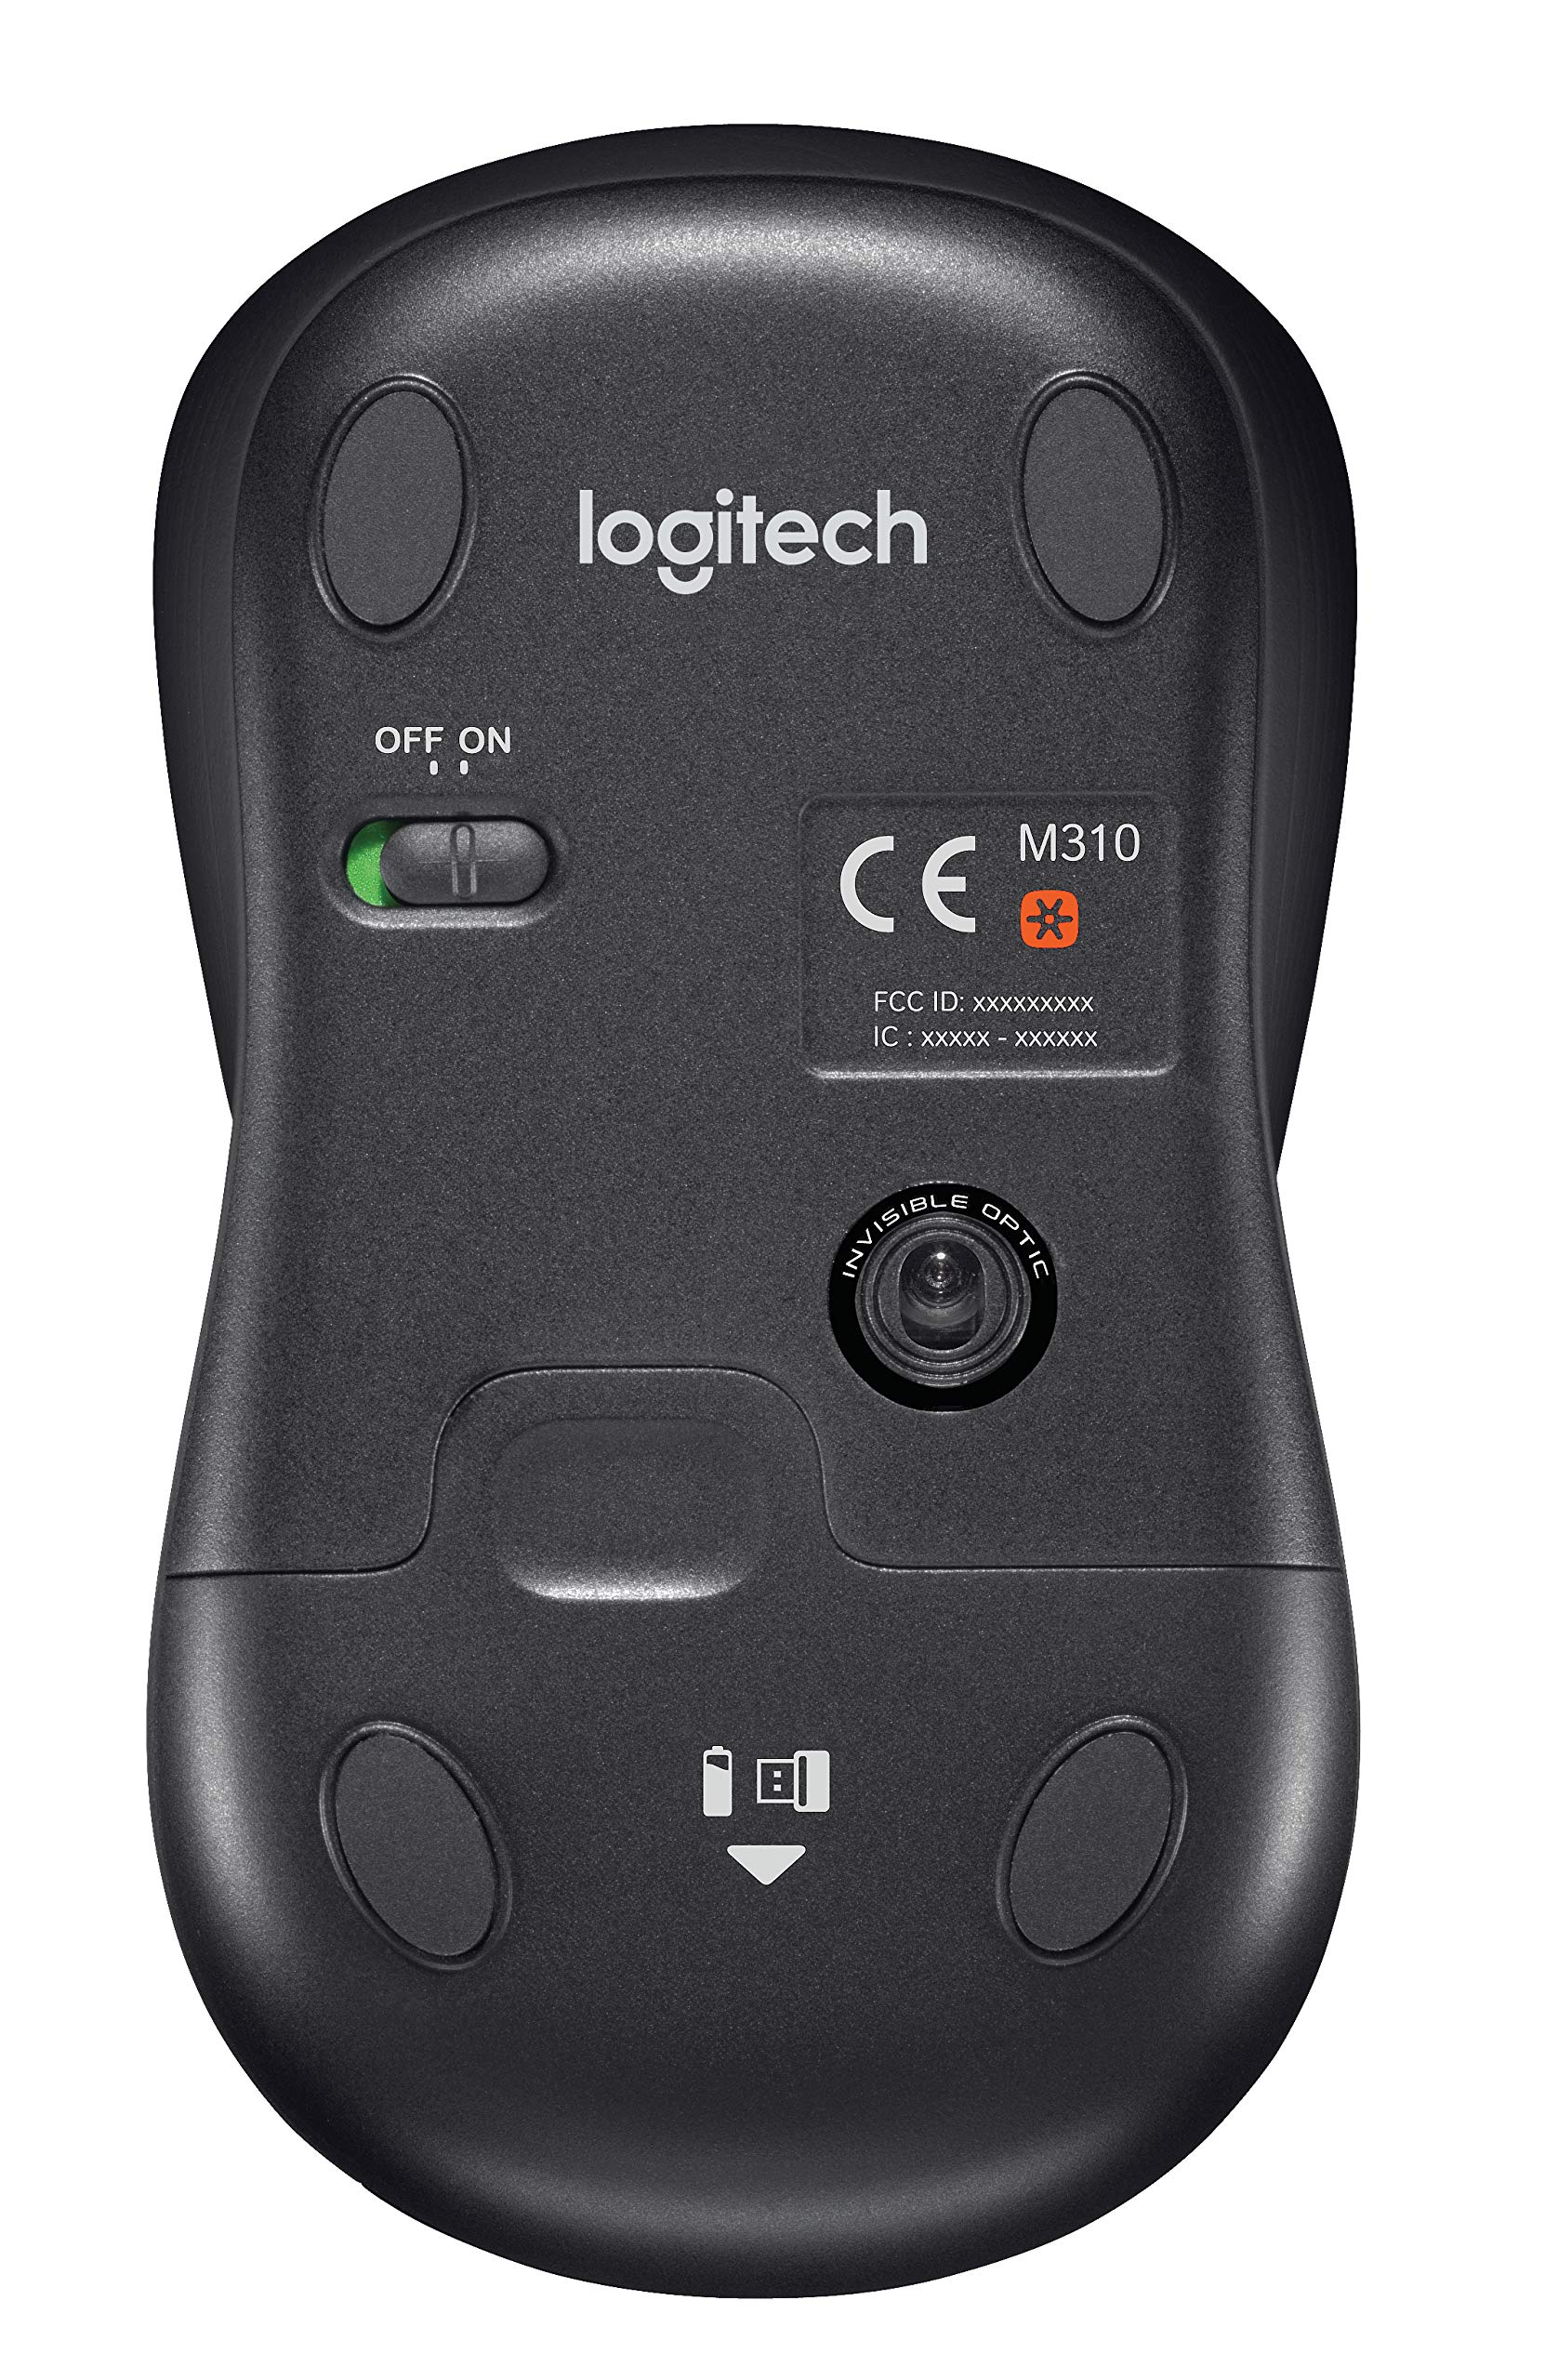 Logitech MK335 Wireless Keyboard and Mouse Combo - Black/Silver